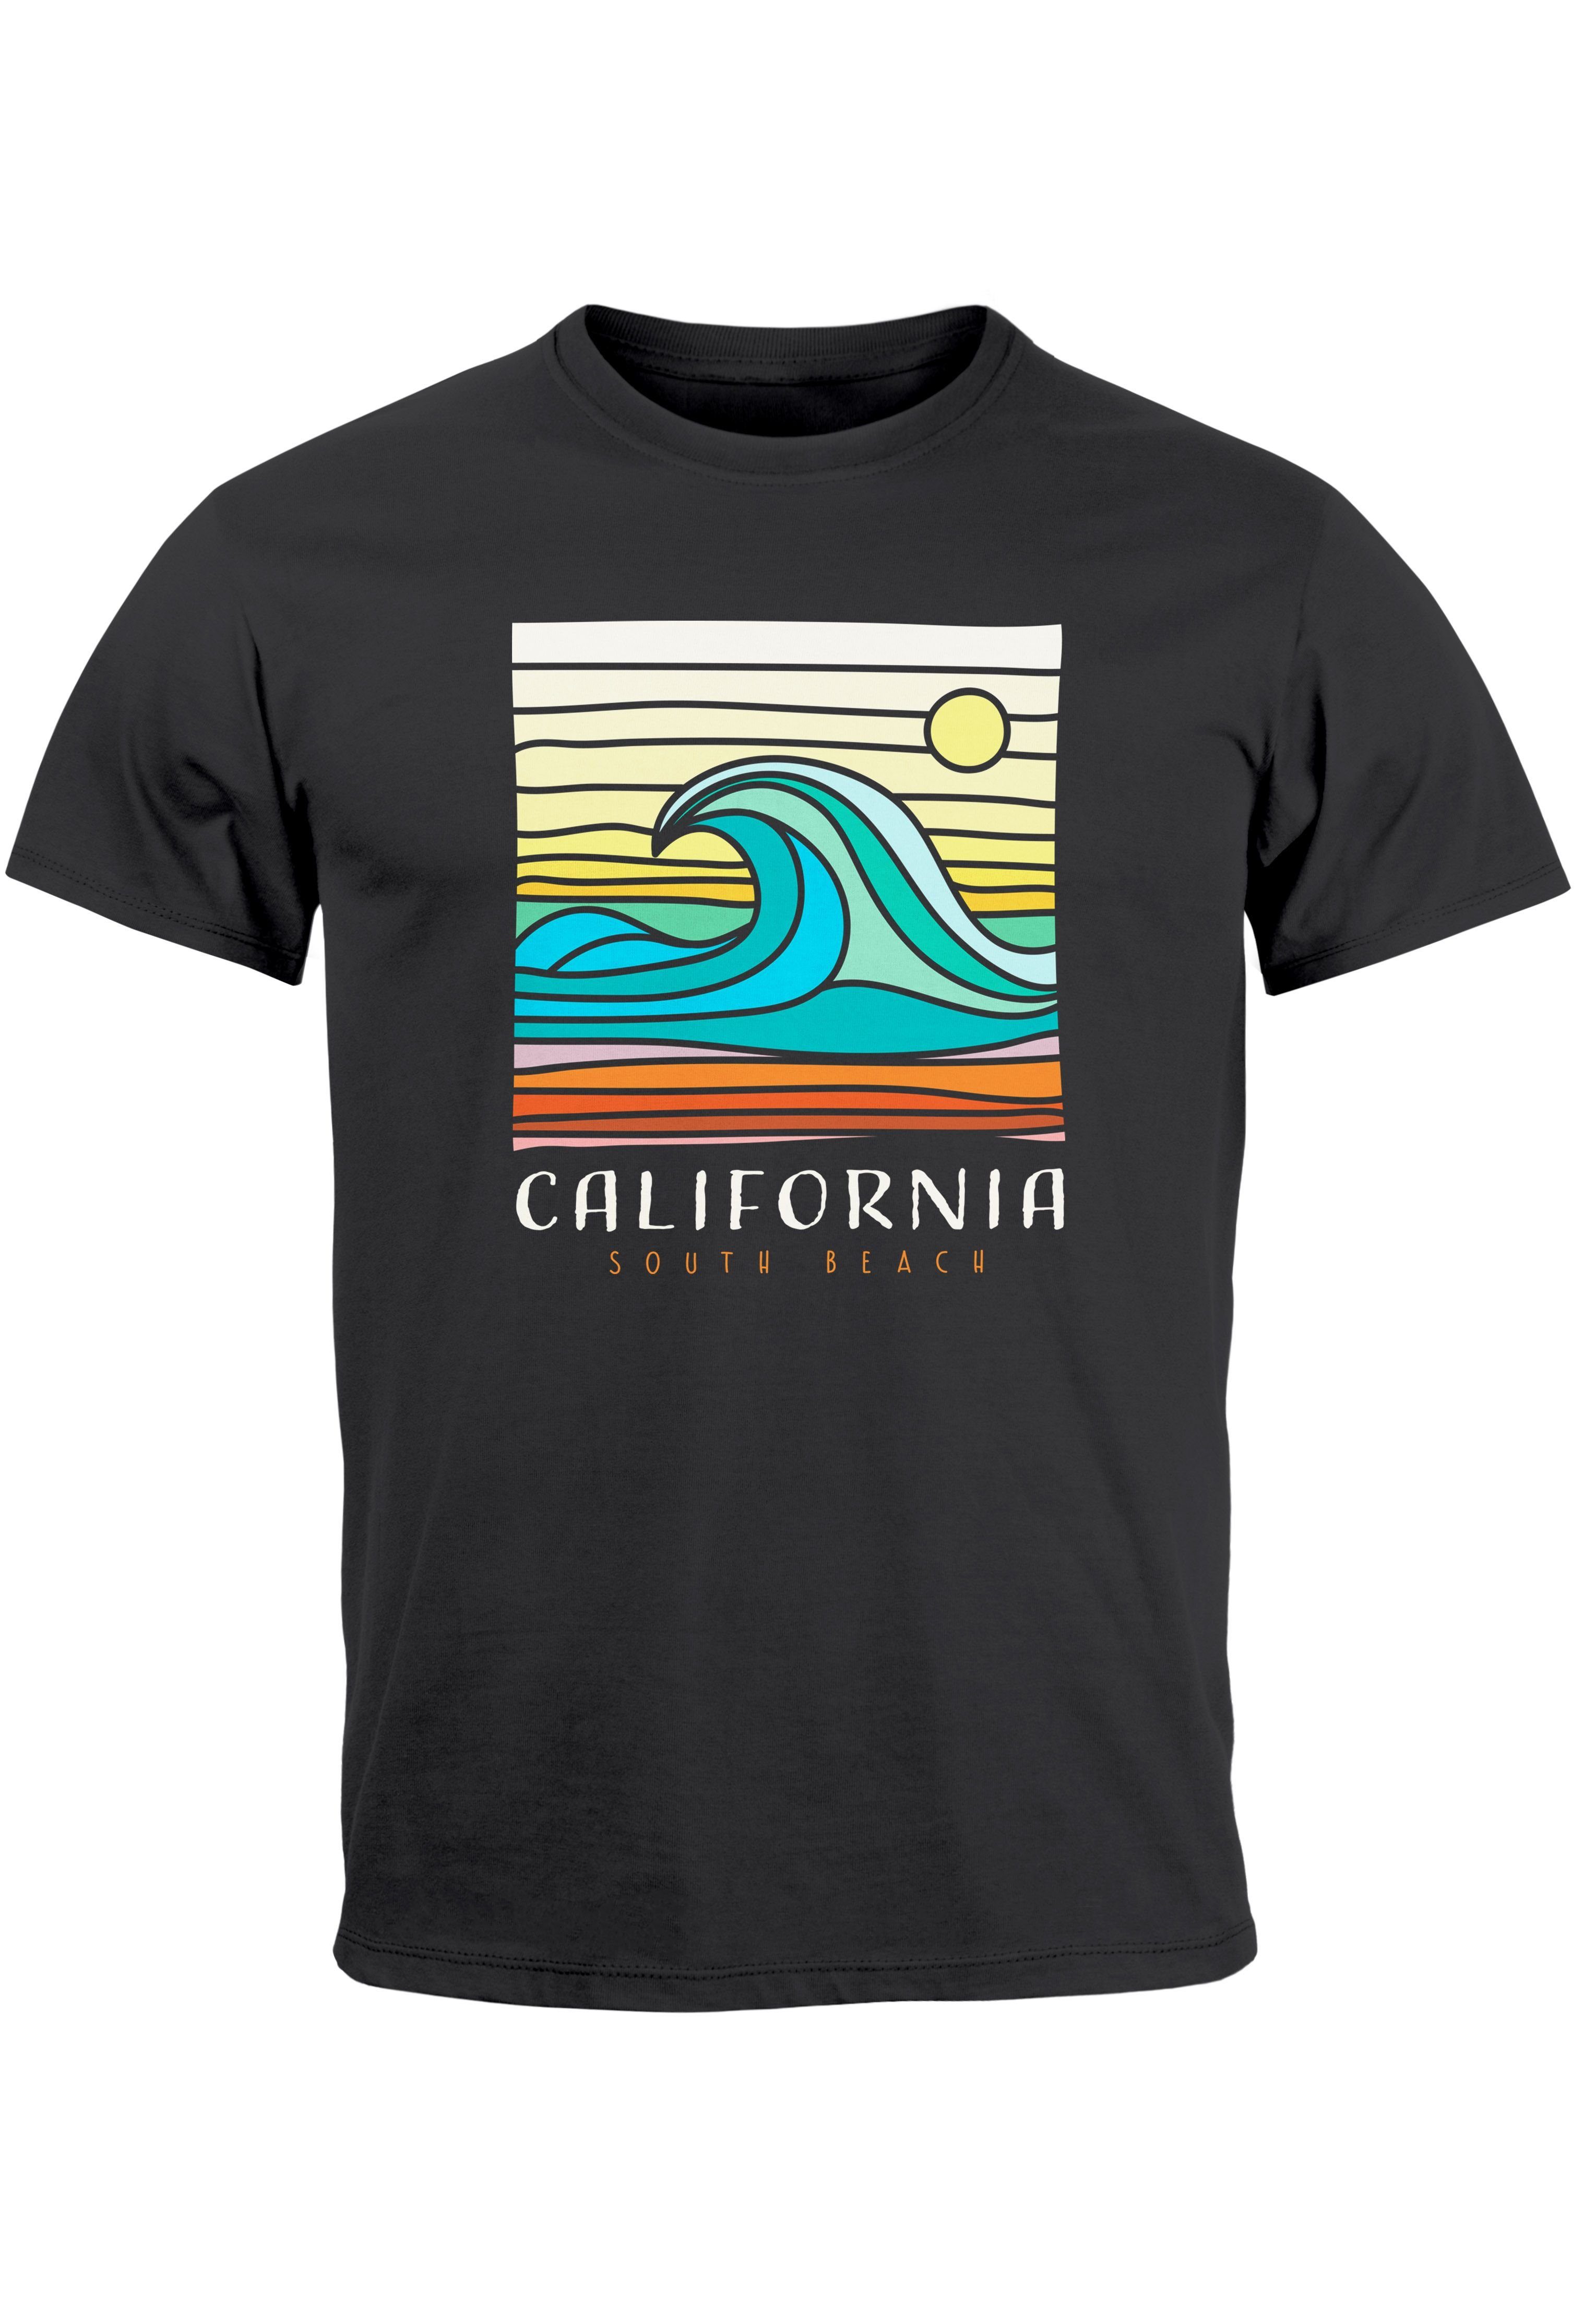 Neverless Print-Shirt Herren T-Shirt California South Beach Welle Wave Surfing Print Aufdruc mit Print anthrazit | T-Shirts